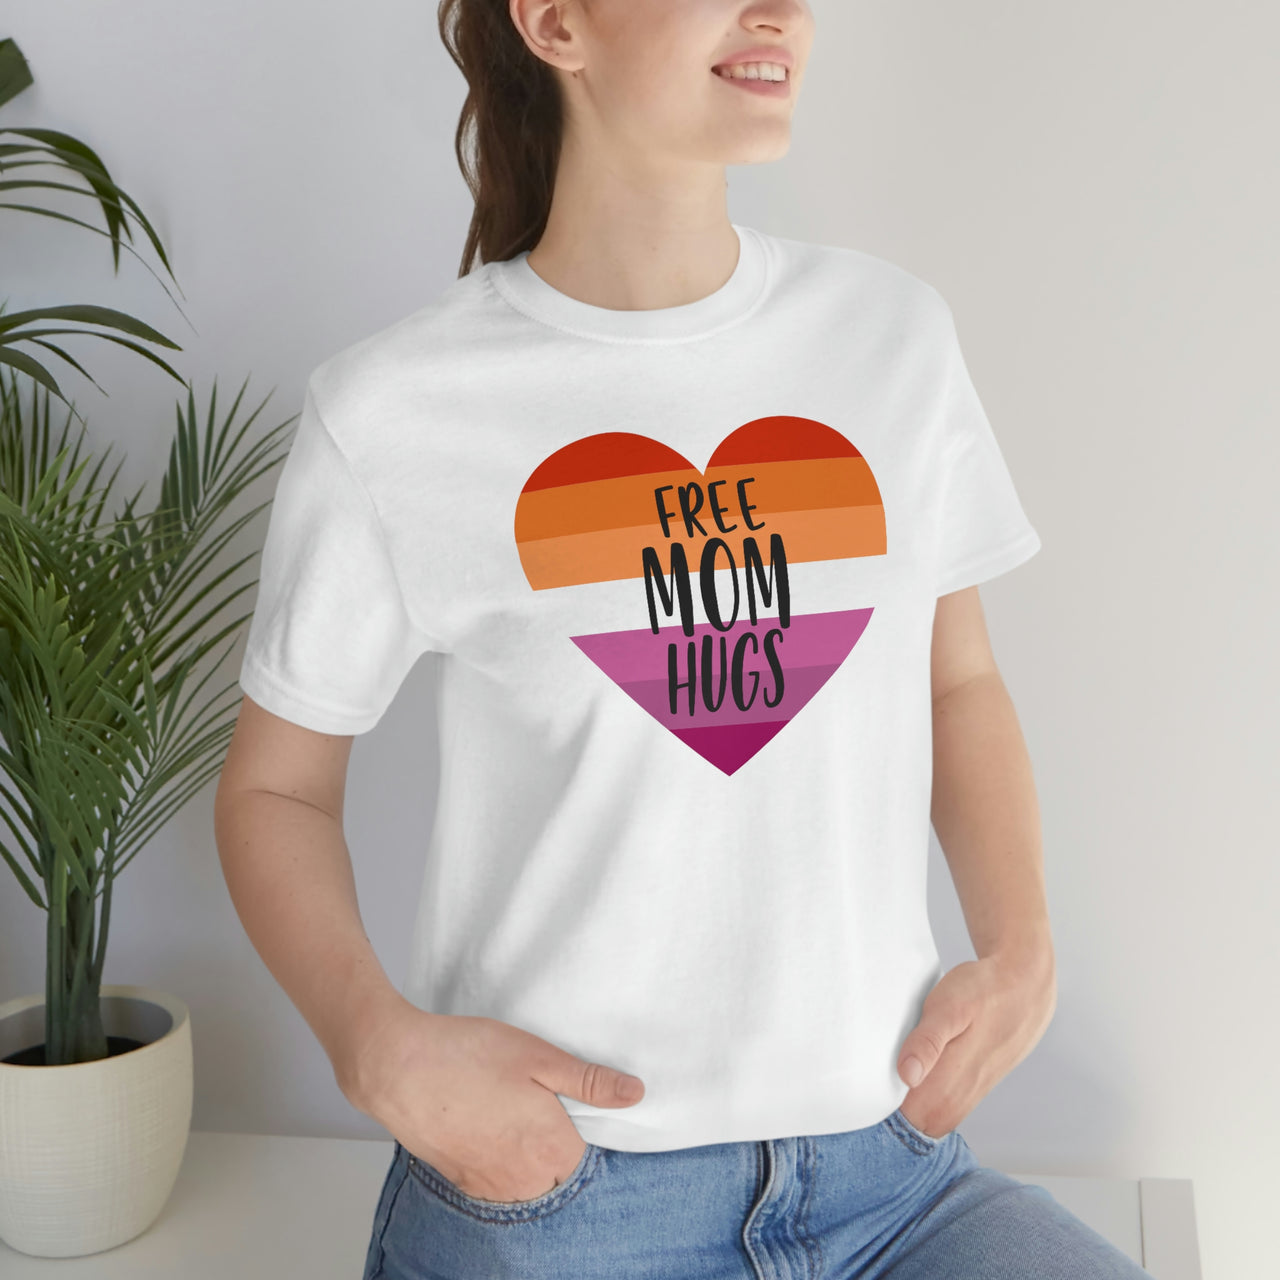 Lesbian Pride Flag Mother's Day Unisex Short Sleeve Tee - Free Mom Hugs SHAVA CO